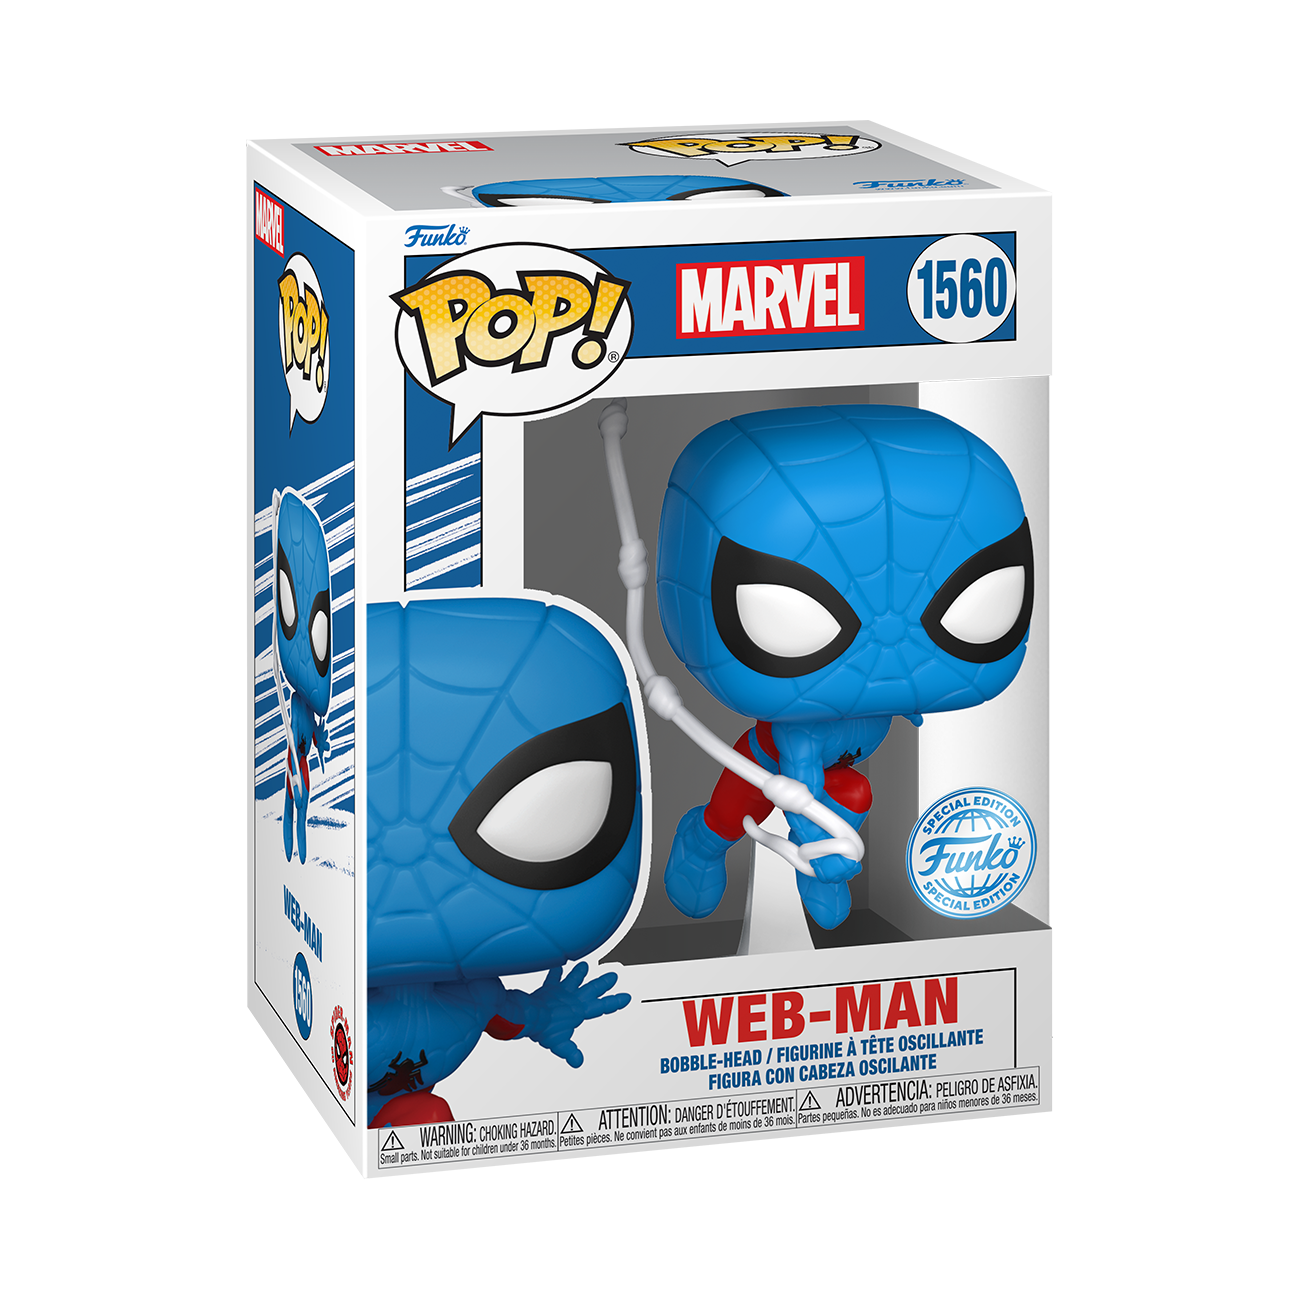 Figurine Miles Morales huit version au choix, Pop! - Marvel, Spider-Man -  Funko